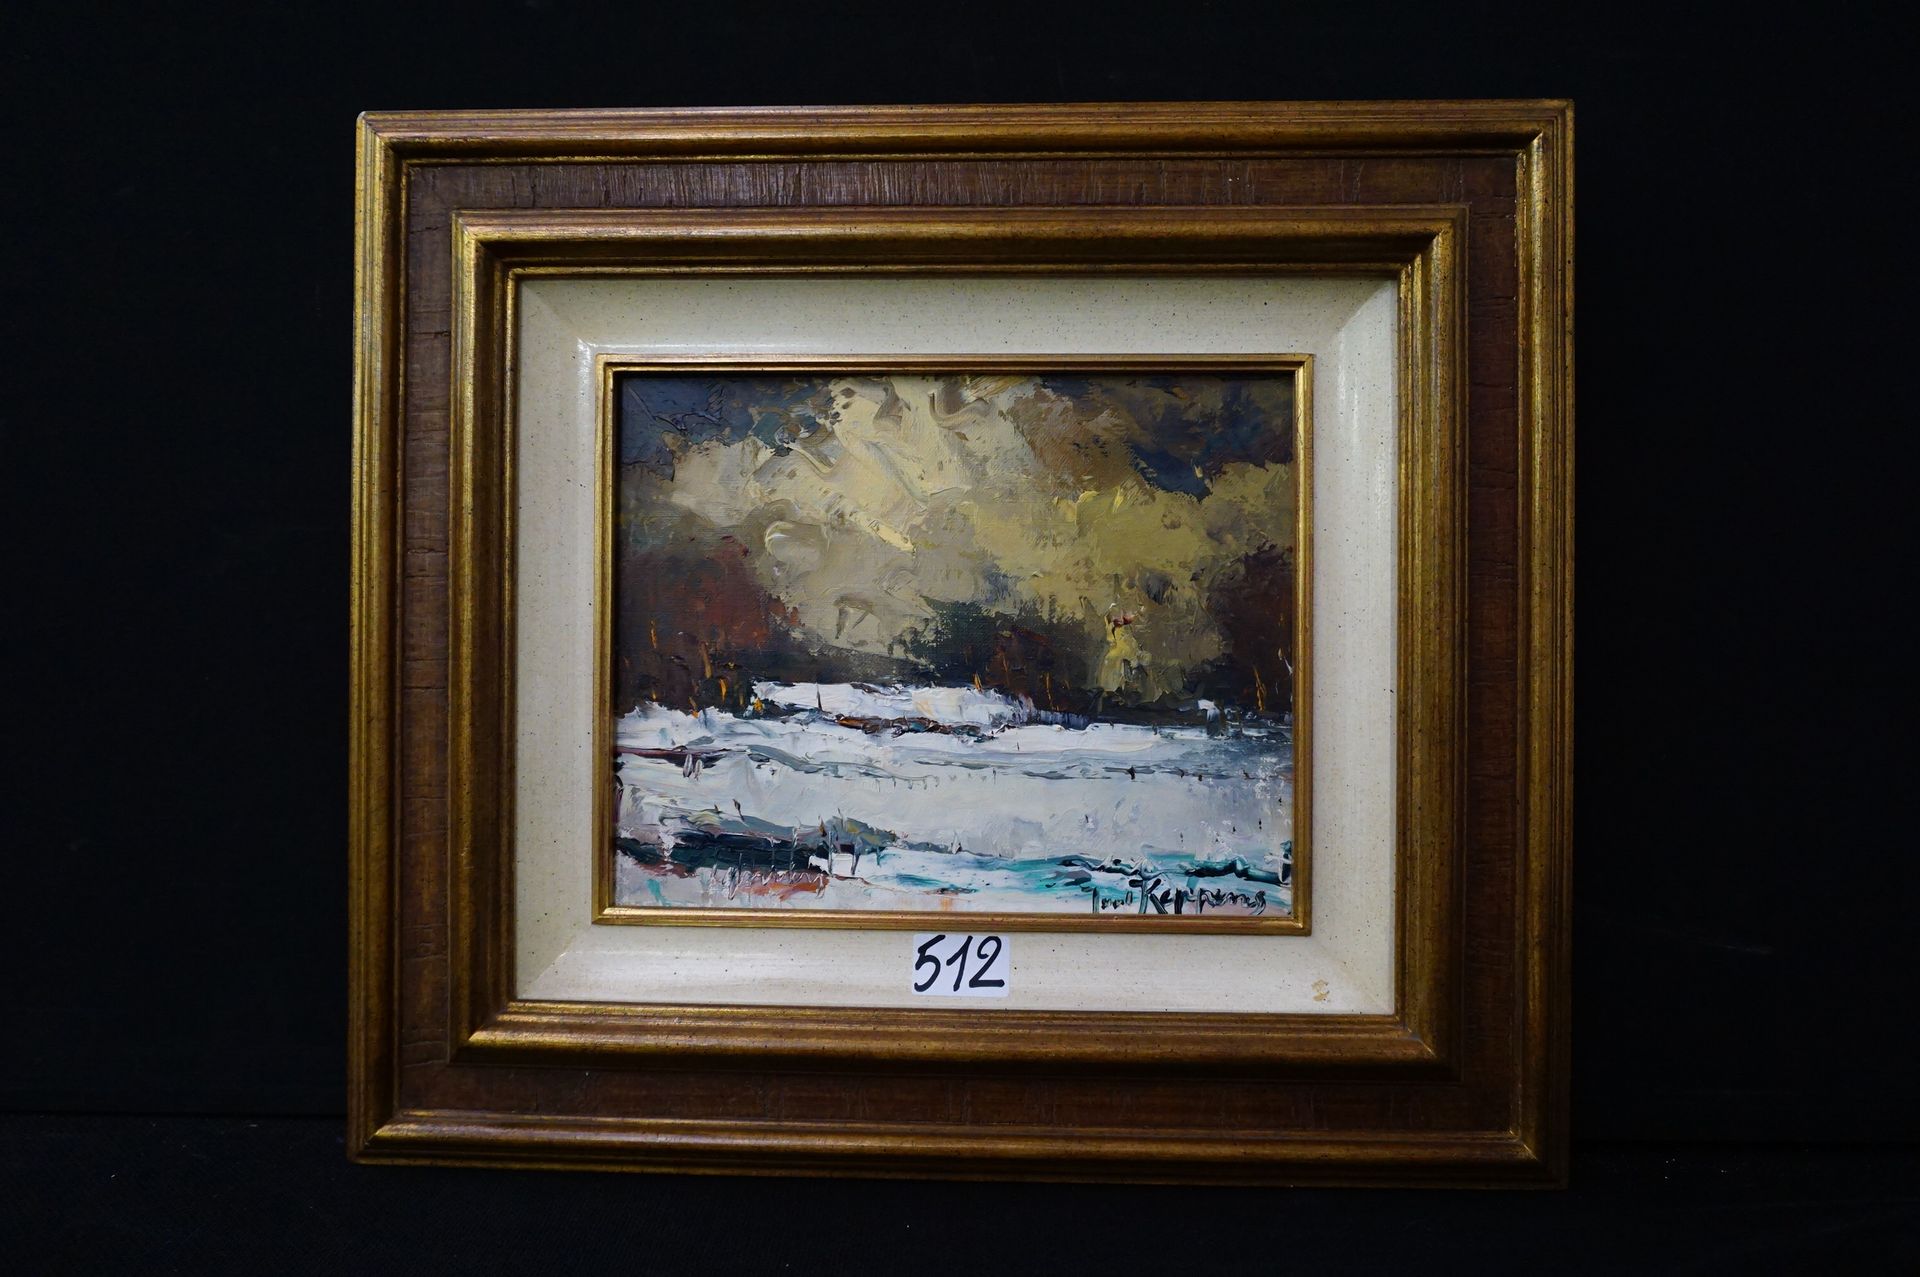 JUUL KEPPENS (1910 - 1992) "Snow Landscape" - Oil on canvas - Signed - 24 x 30 c&hellip;